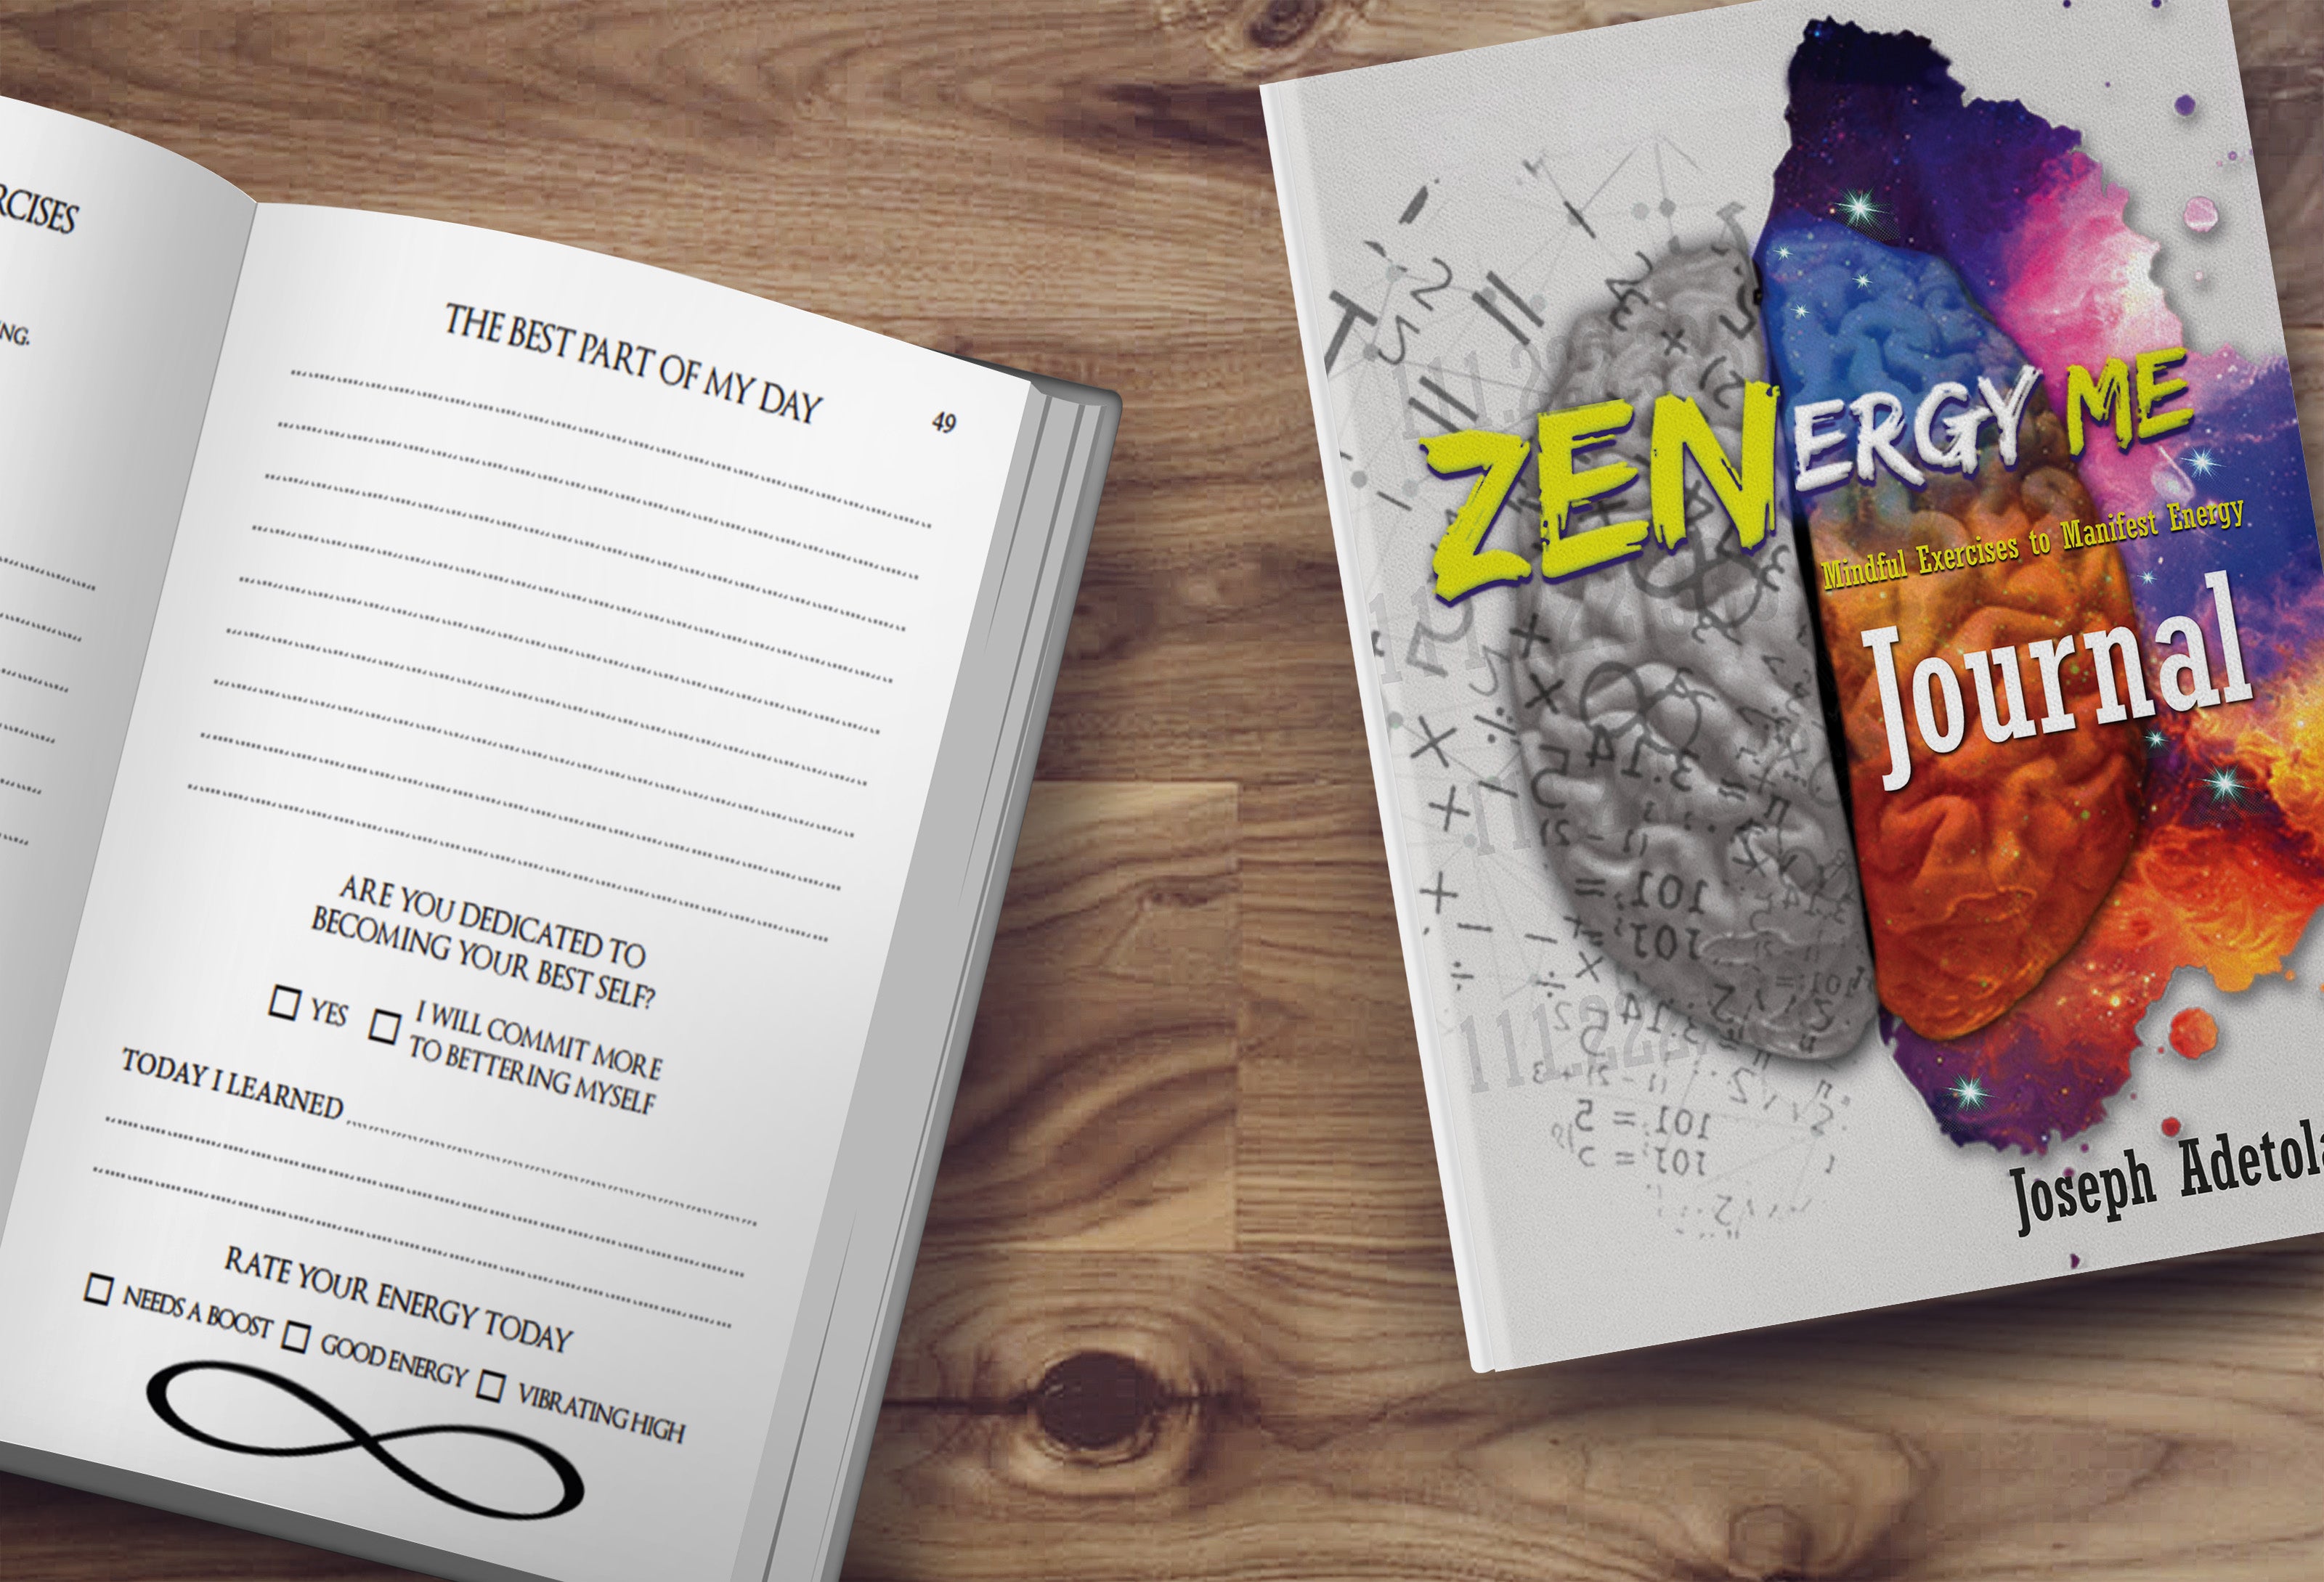 ZenergyMe (Manifest Energy) Journal by Zentola